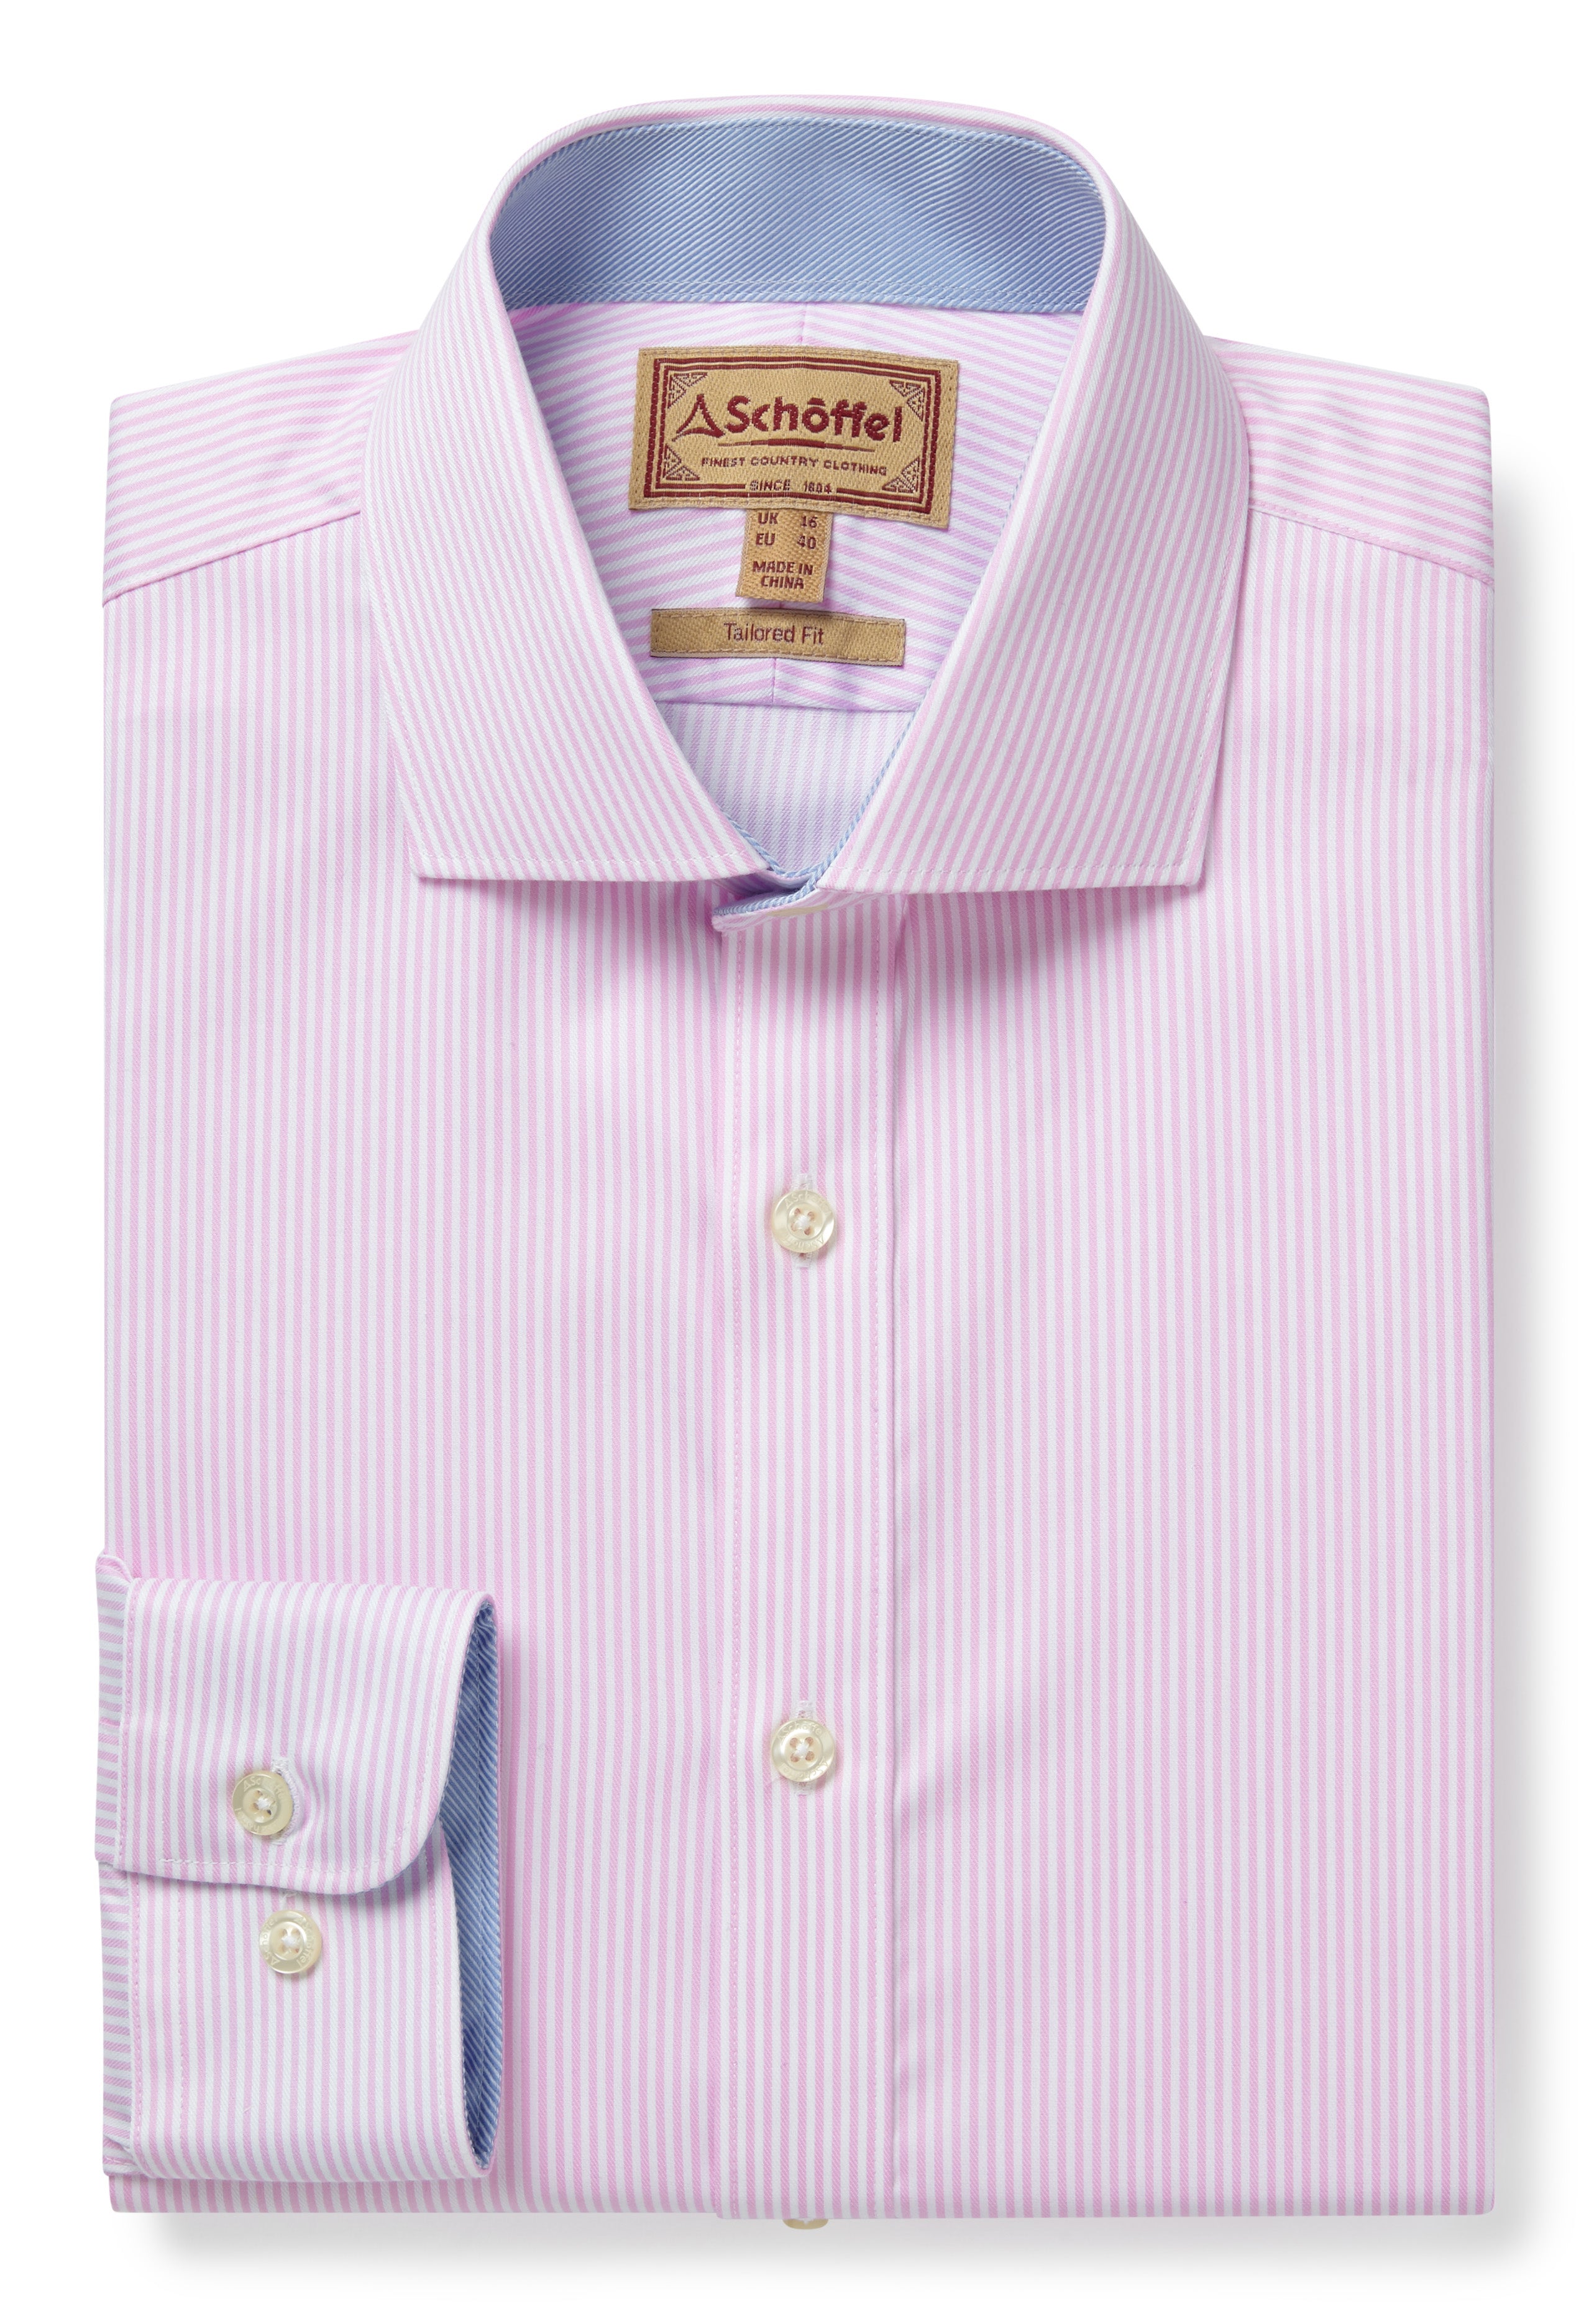 Greenwich Tailored Shirt - Pale Pink Stripe